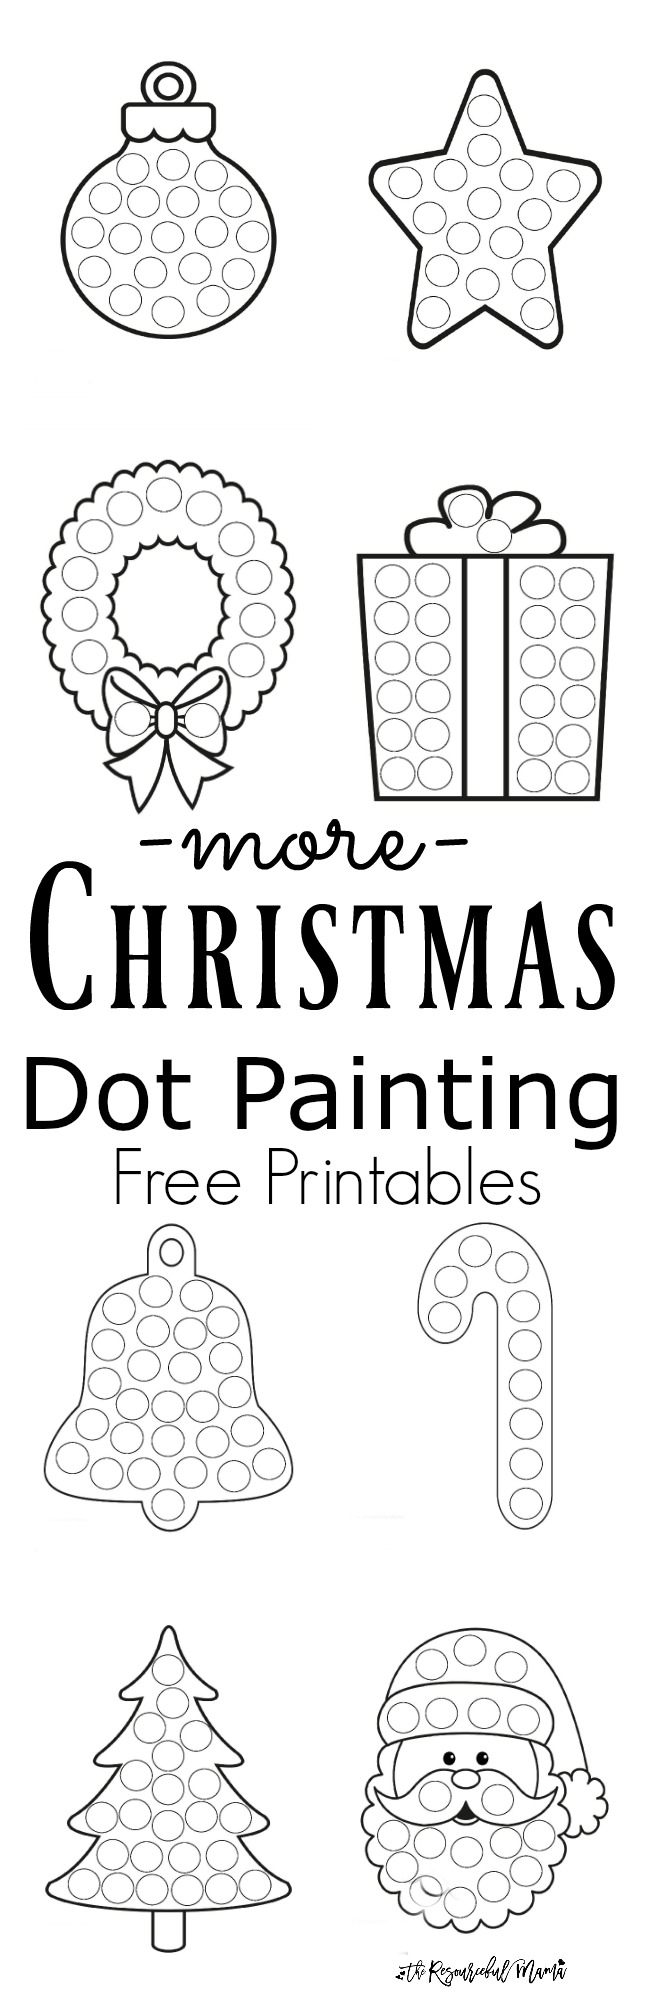 More Christmas Dot Painting {Free Printables} - The